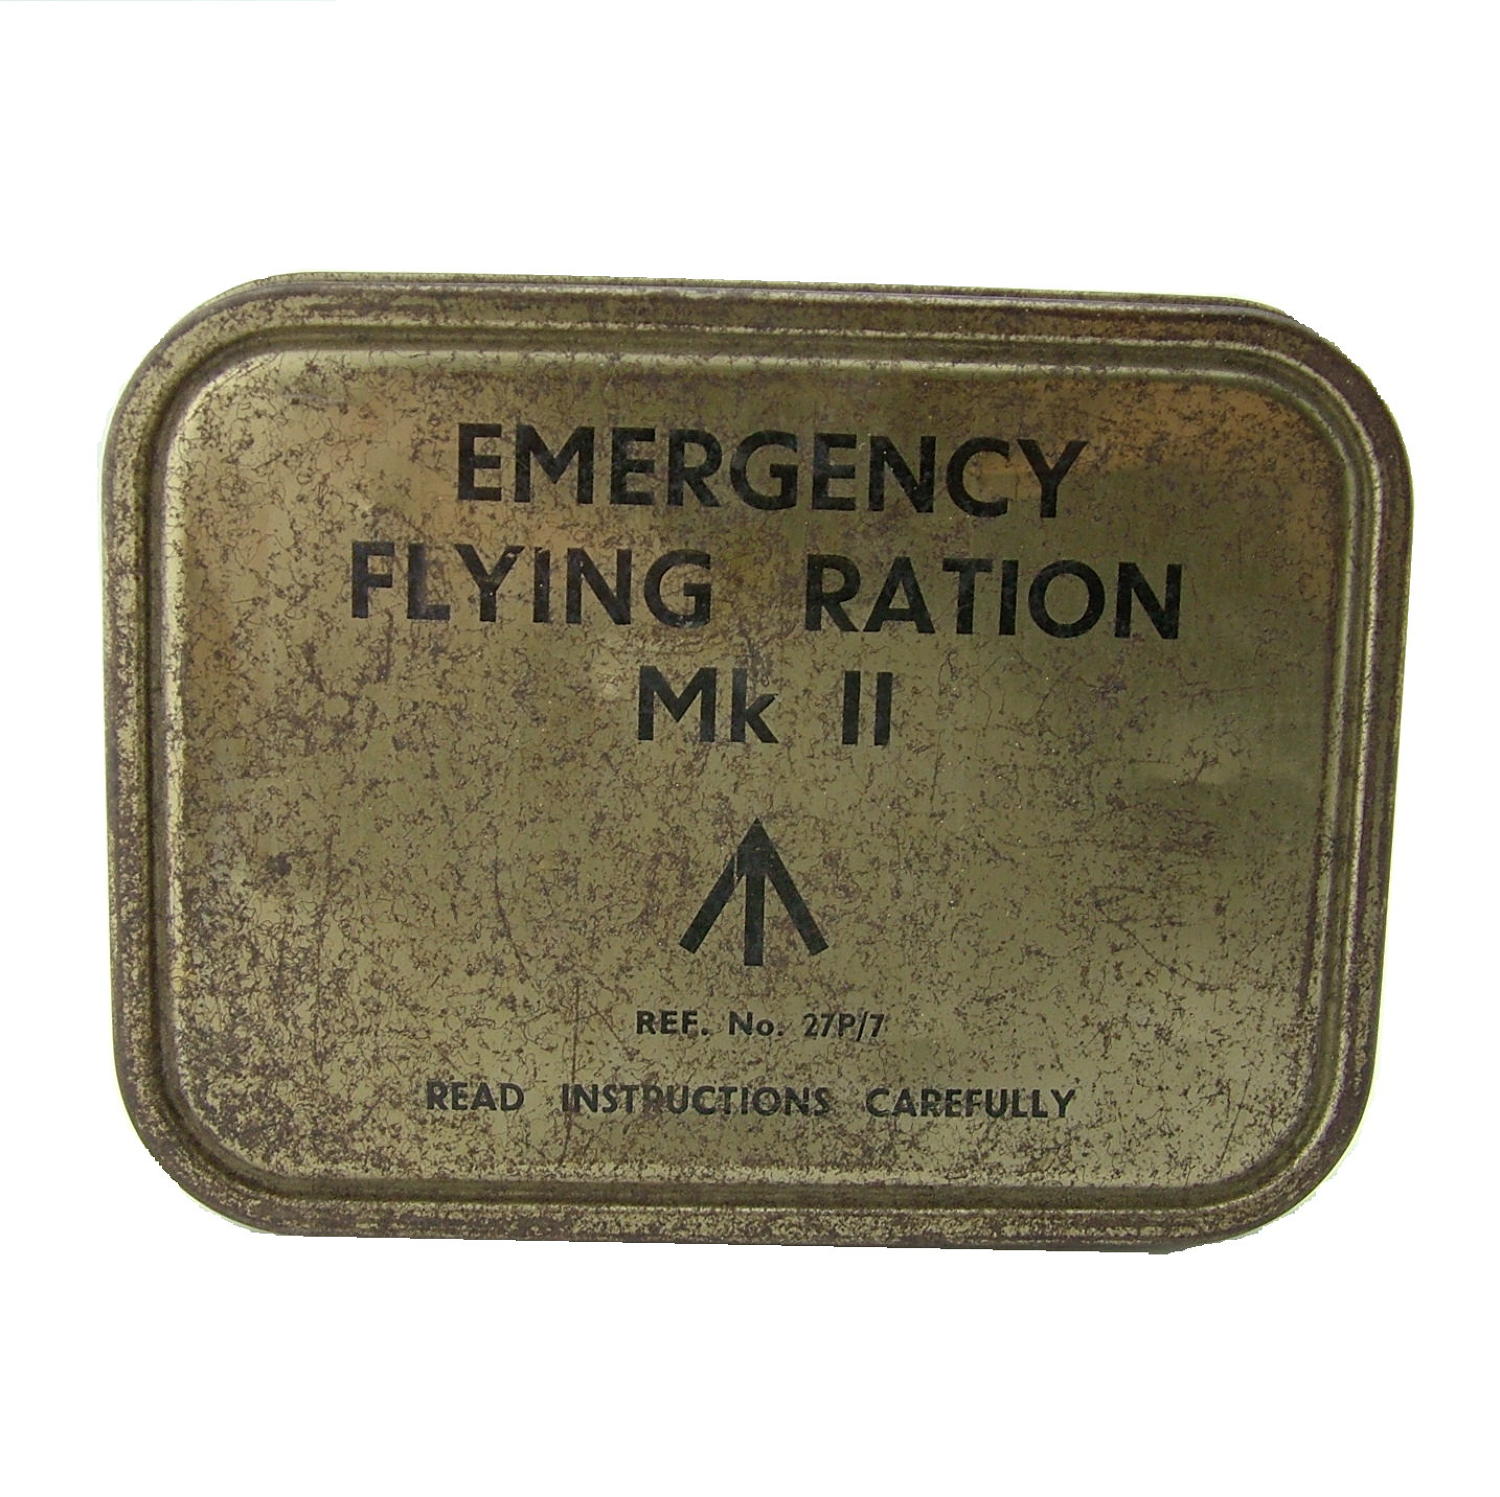 Air Ministry emergency flying ration, Mk.II